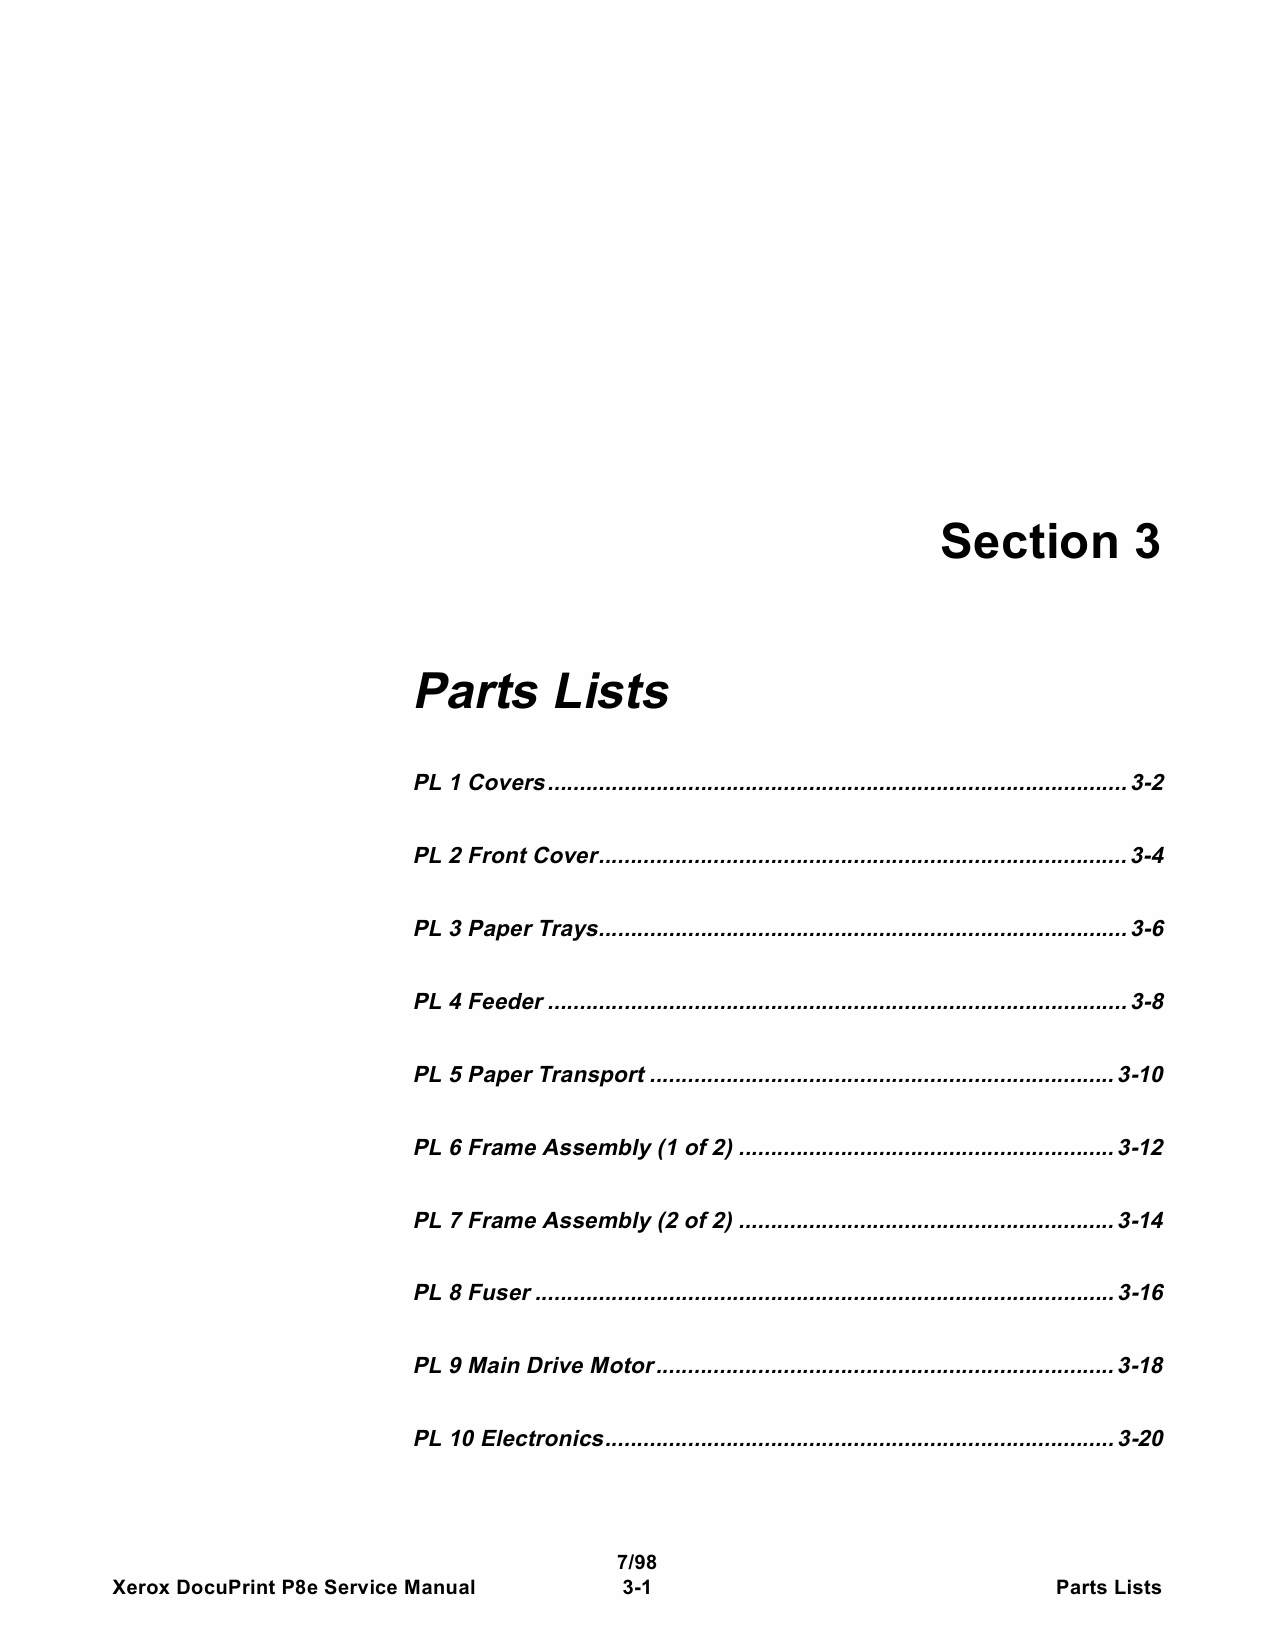 Xerox DocuPrint P8e P8ex Parts List and Service Manual-3